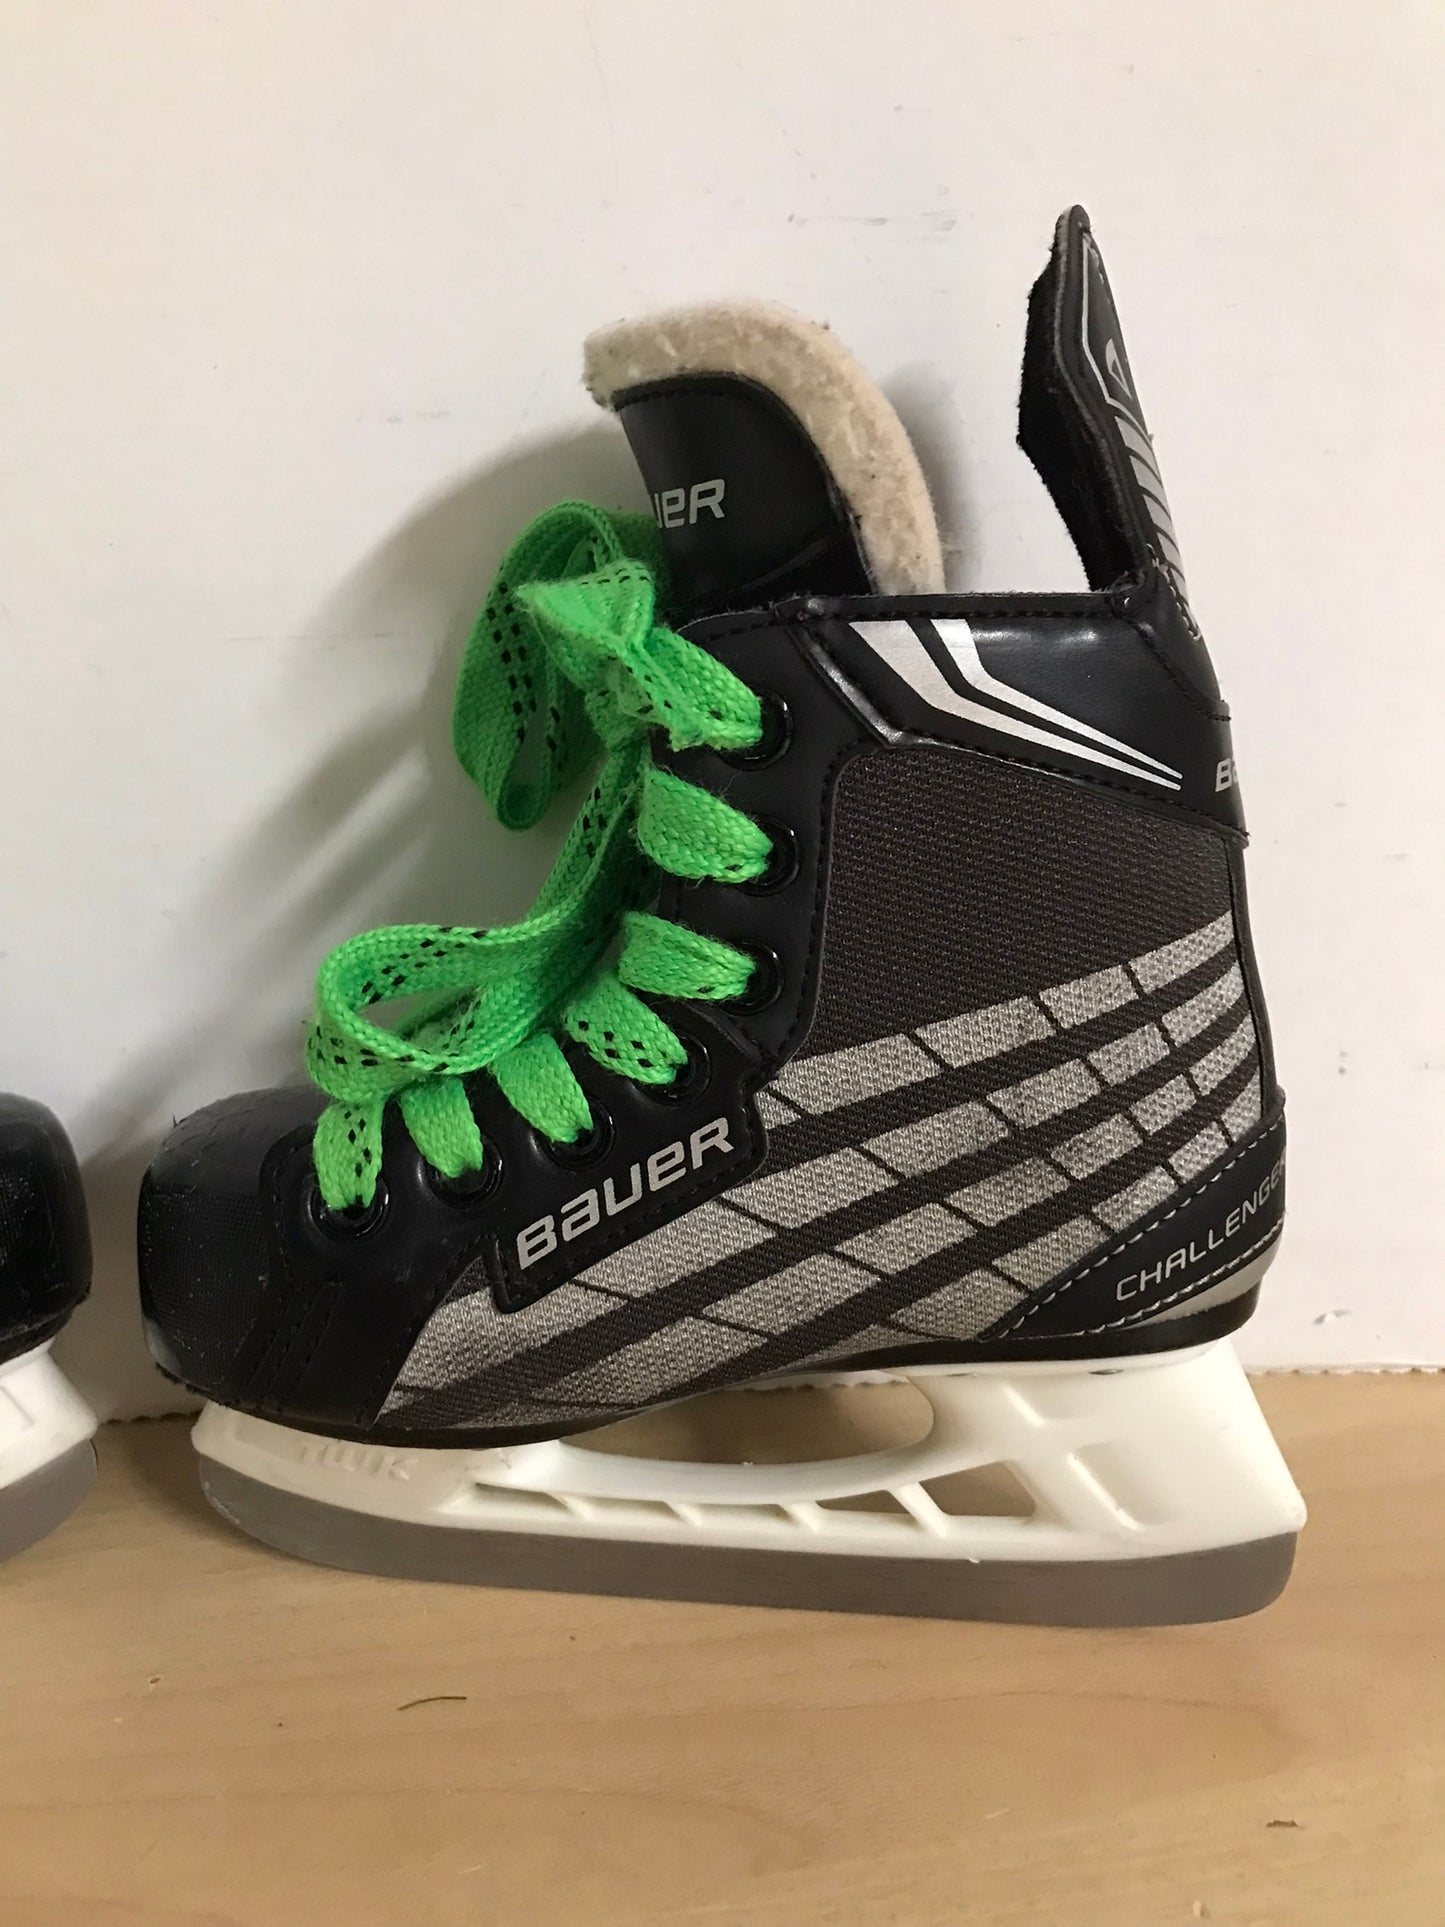 Hockey Skates Child Size 11 Shoe Size Bauer Challenger Excellent